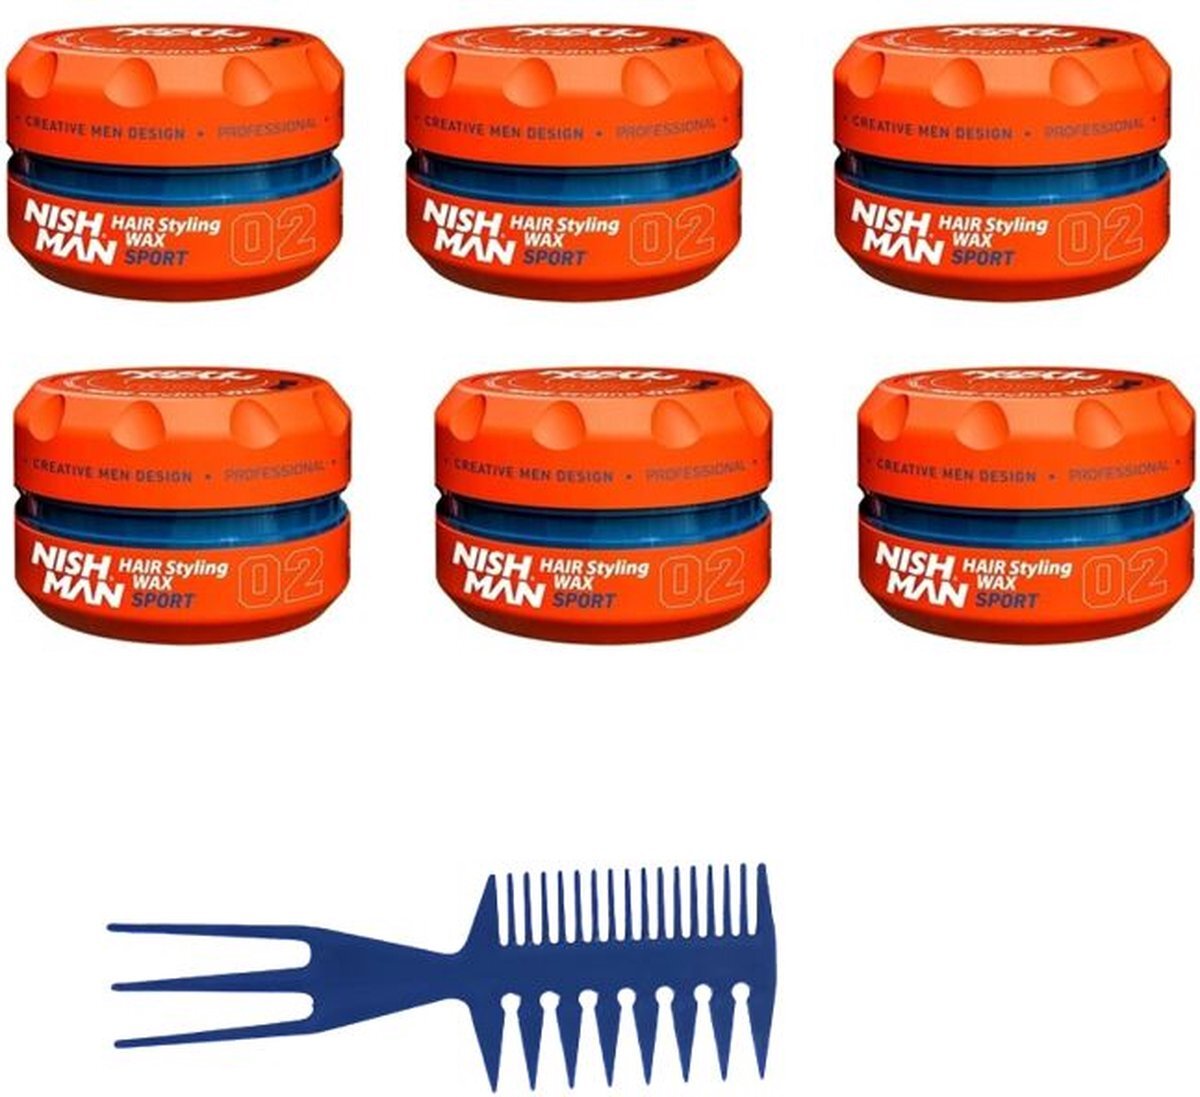 Nish Man Nishmanwax 02 Hair Styling Wax Sport 6 stuks+ Free Styling Comb